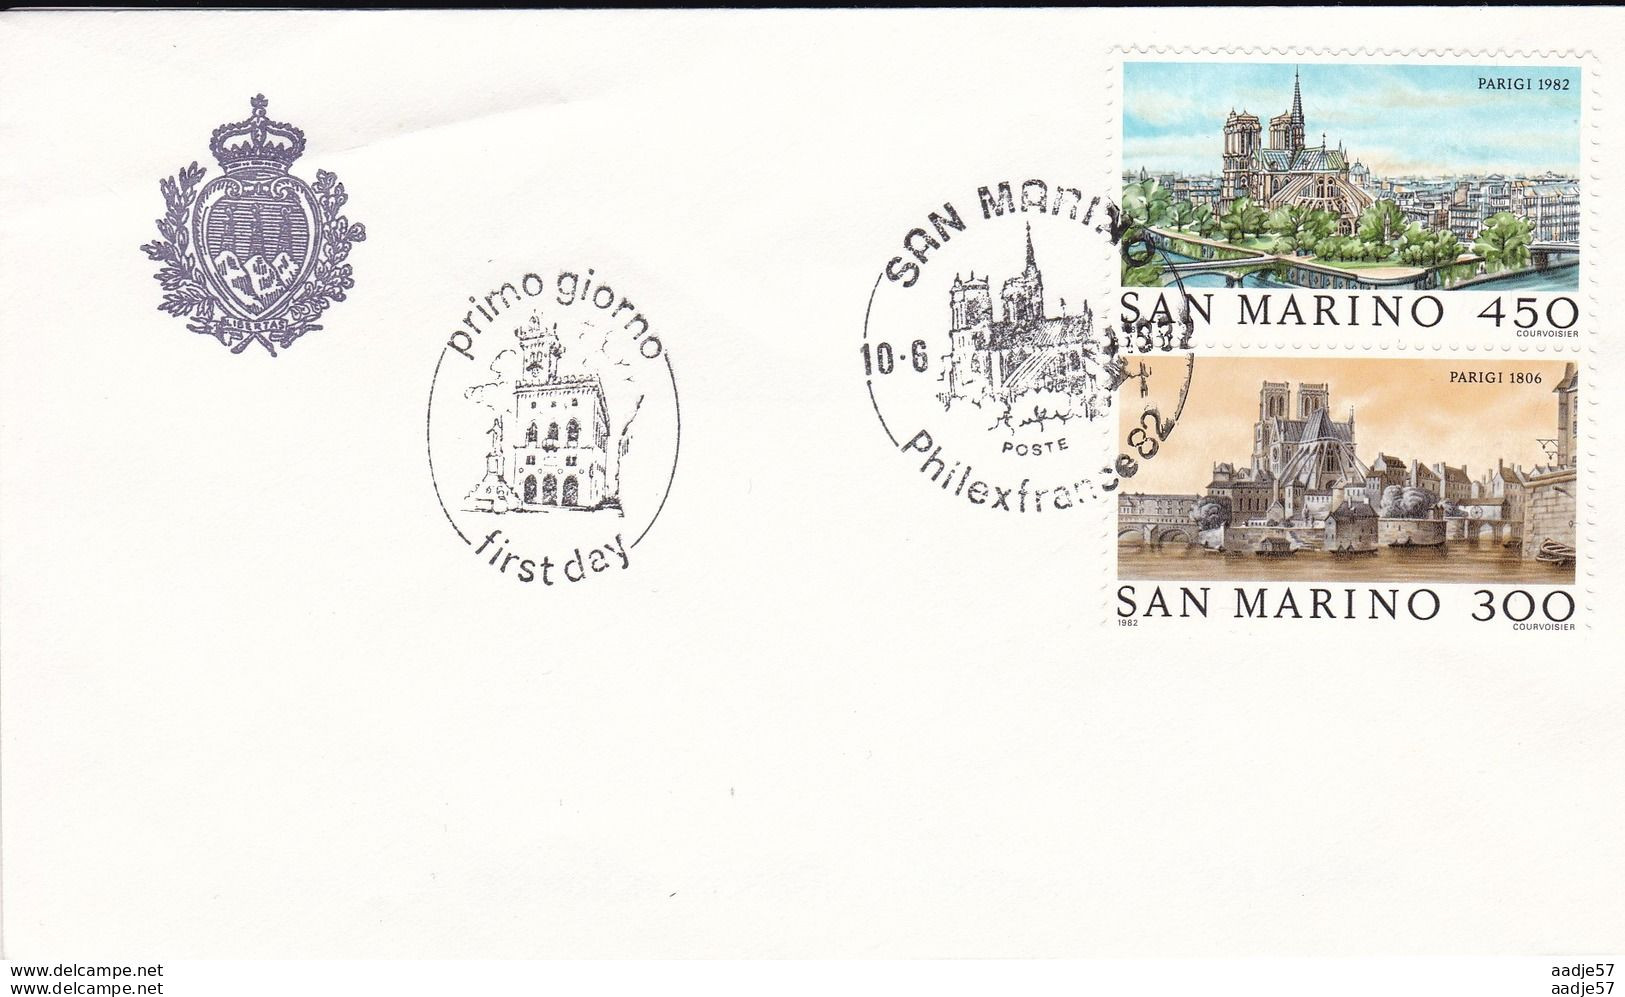 San Marino 1982 FDC At Phlixfrance 1982 Paris - Covers & Documents